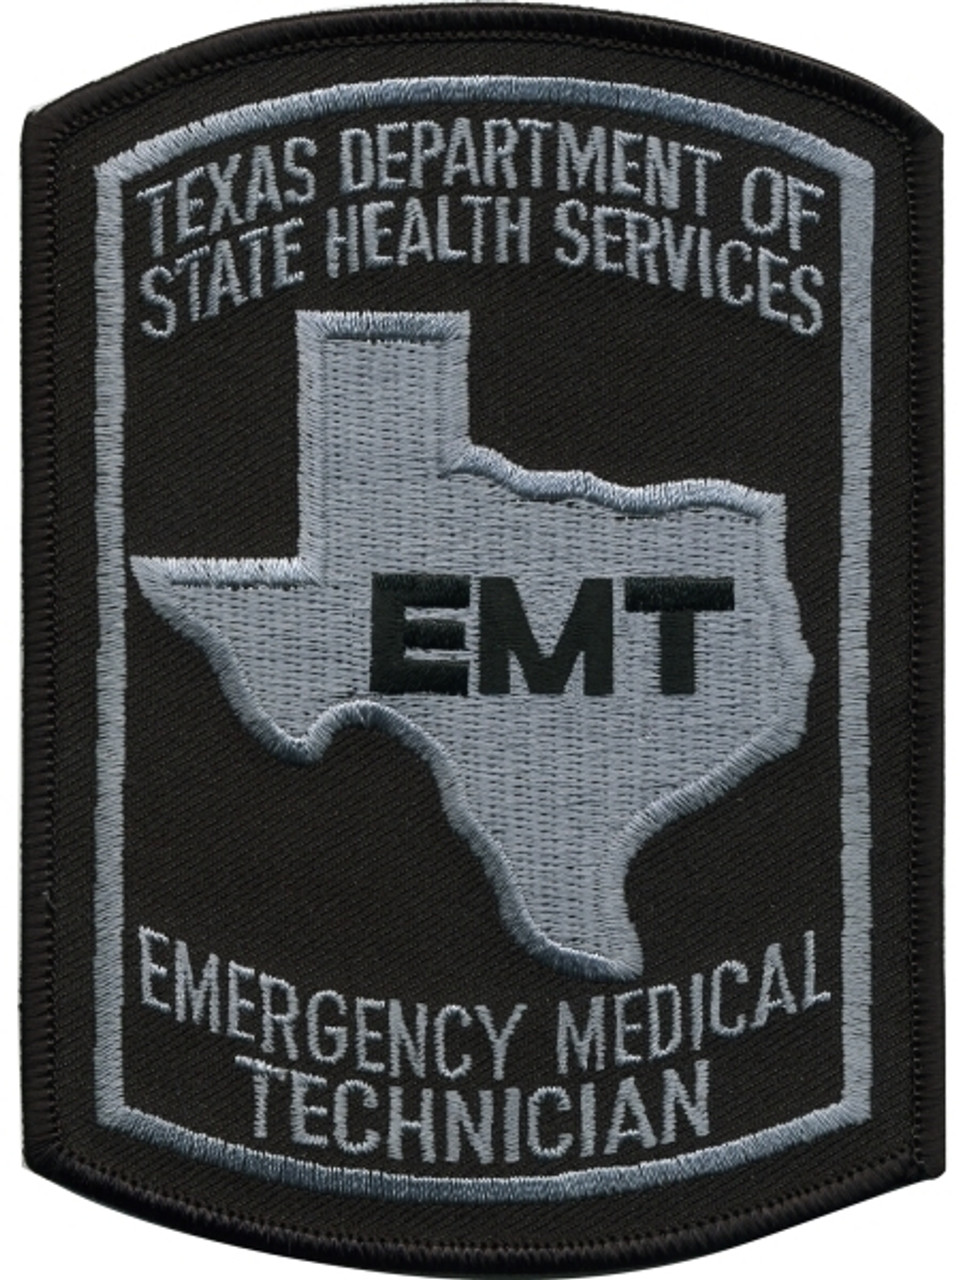 New Mexico EMT BASIC shoulder patch